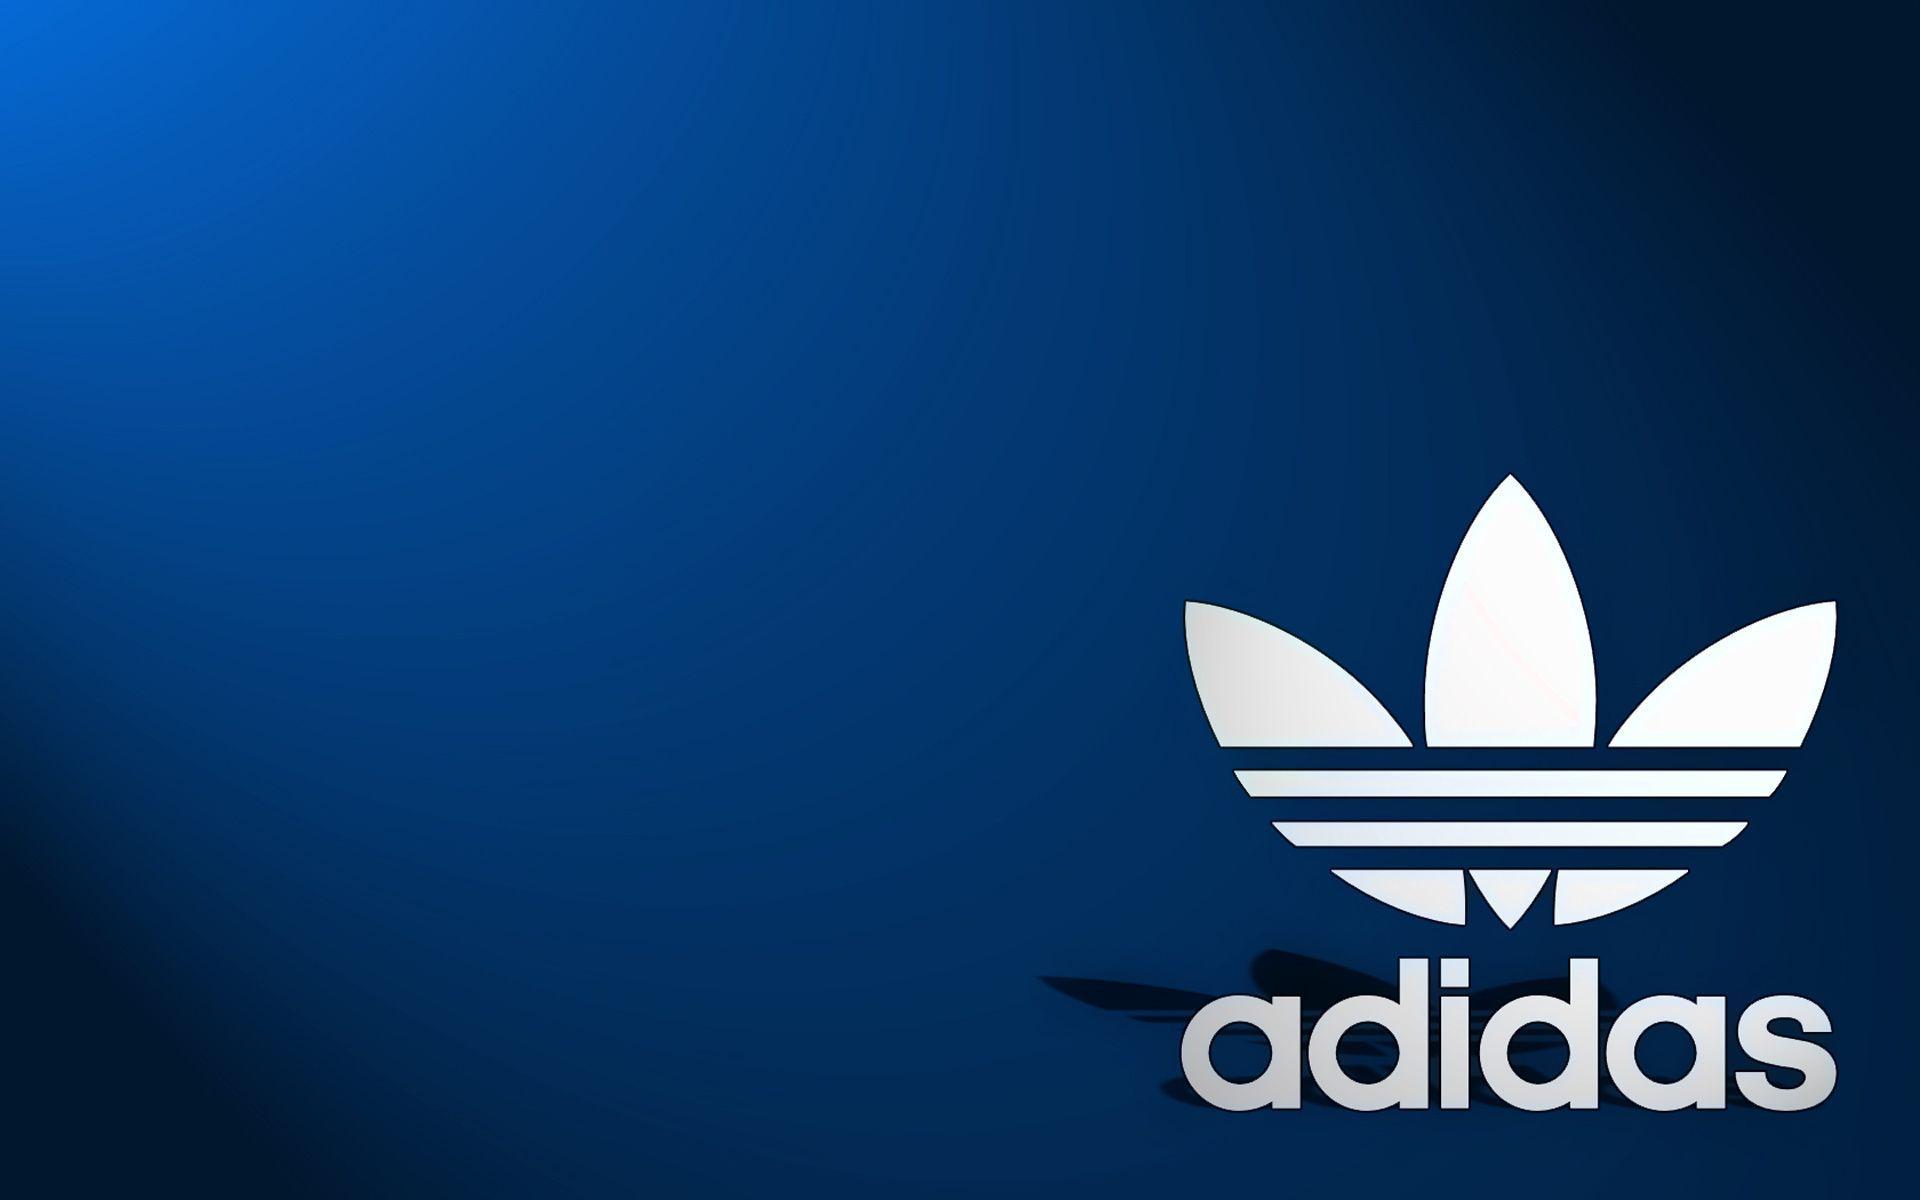 Adidas Logo wallpaper